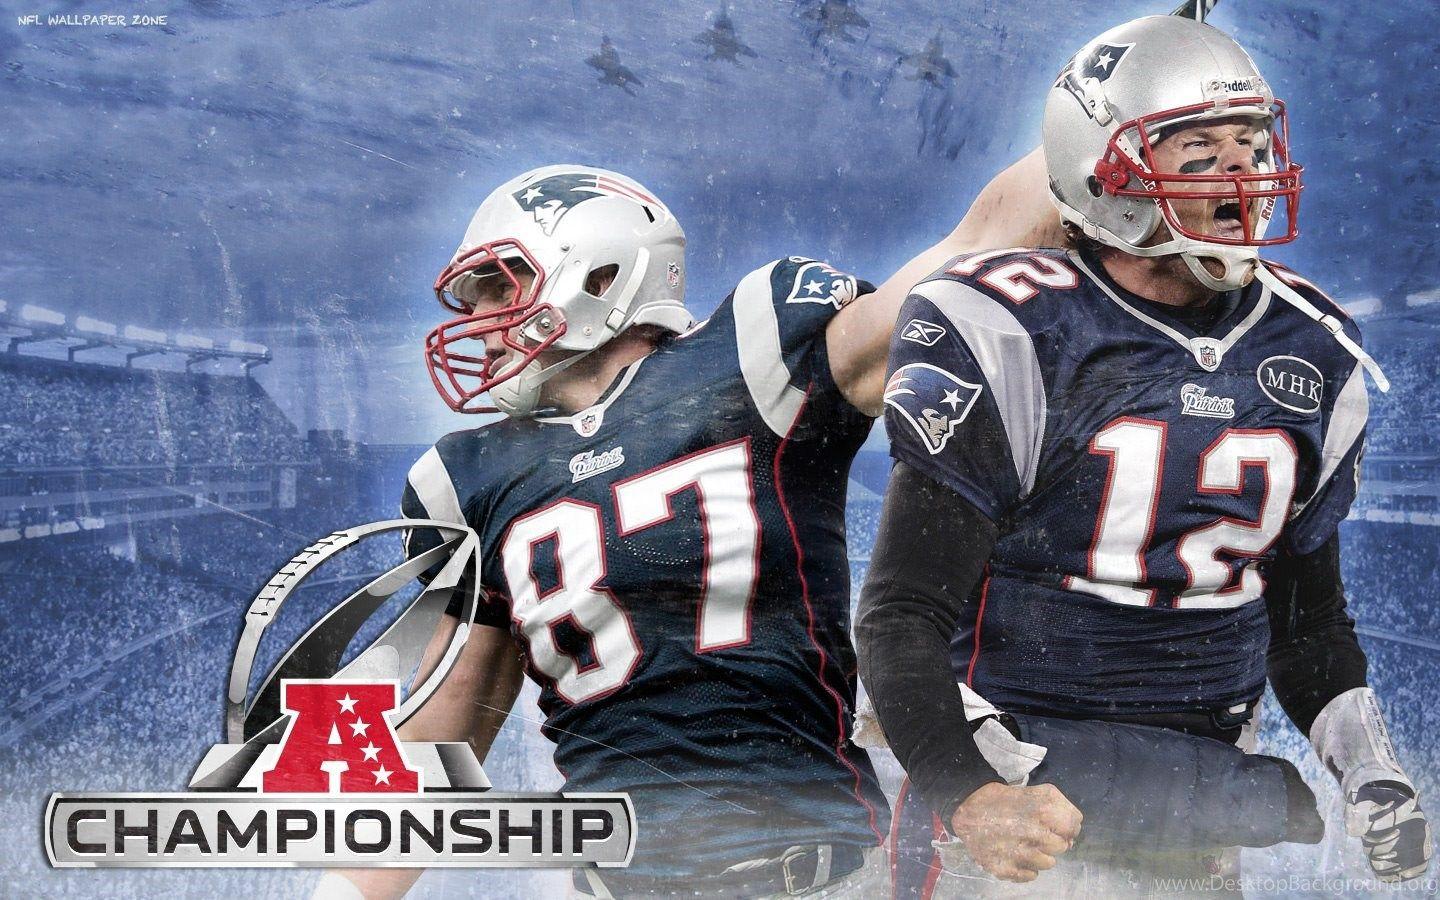 NFL Wallpaper Zone: New England Patriots AFC Championship